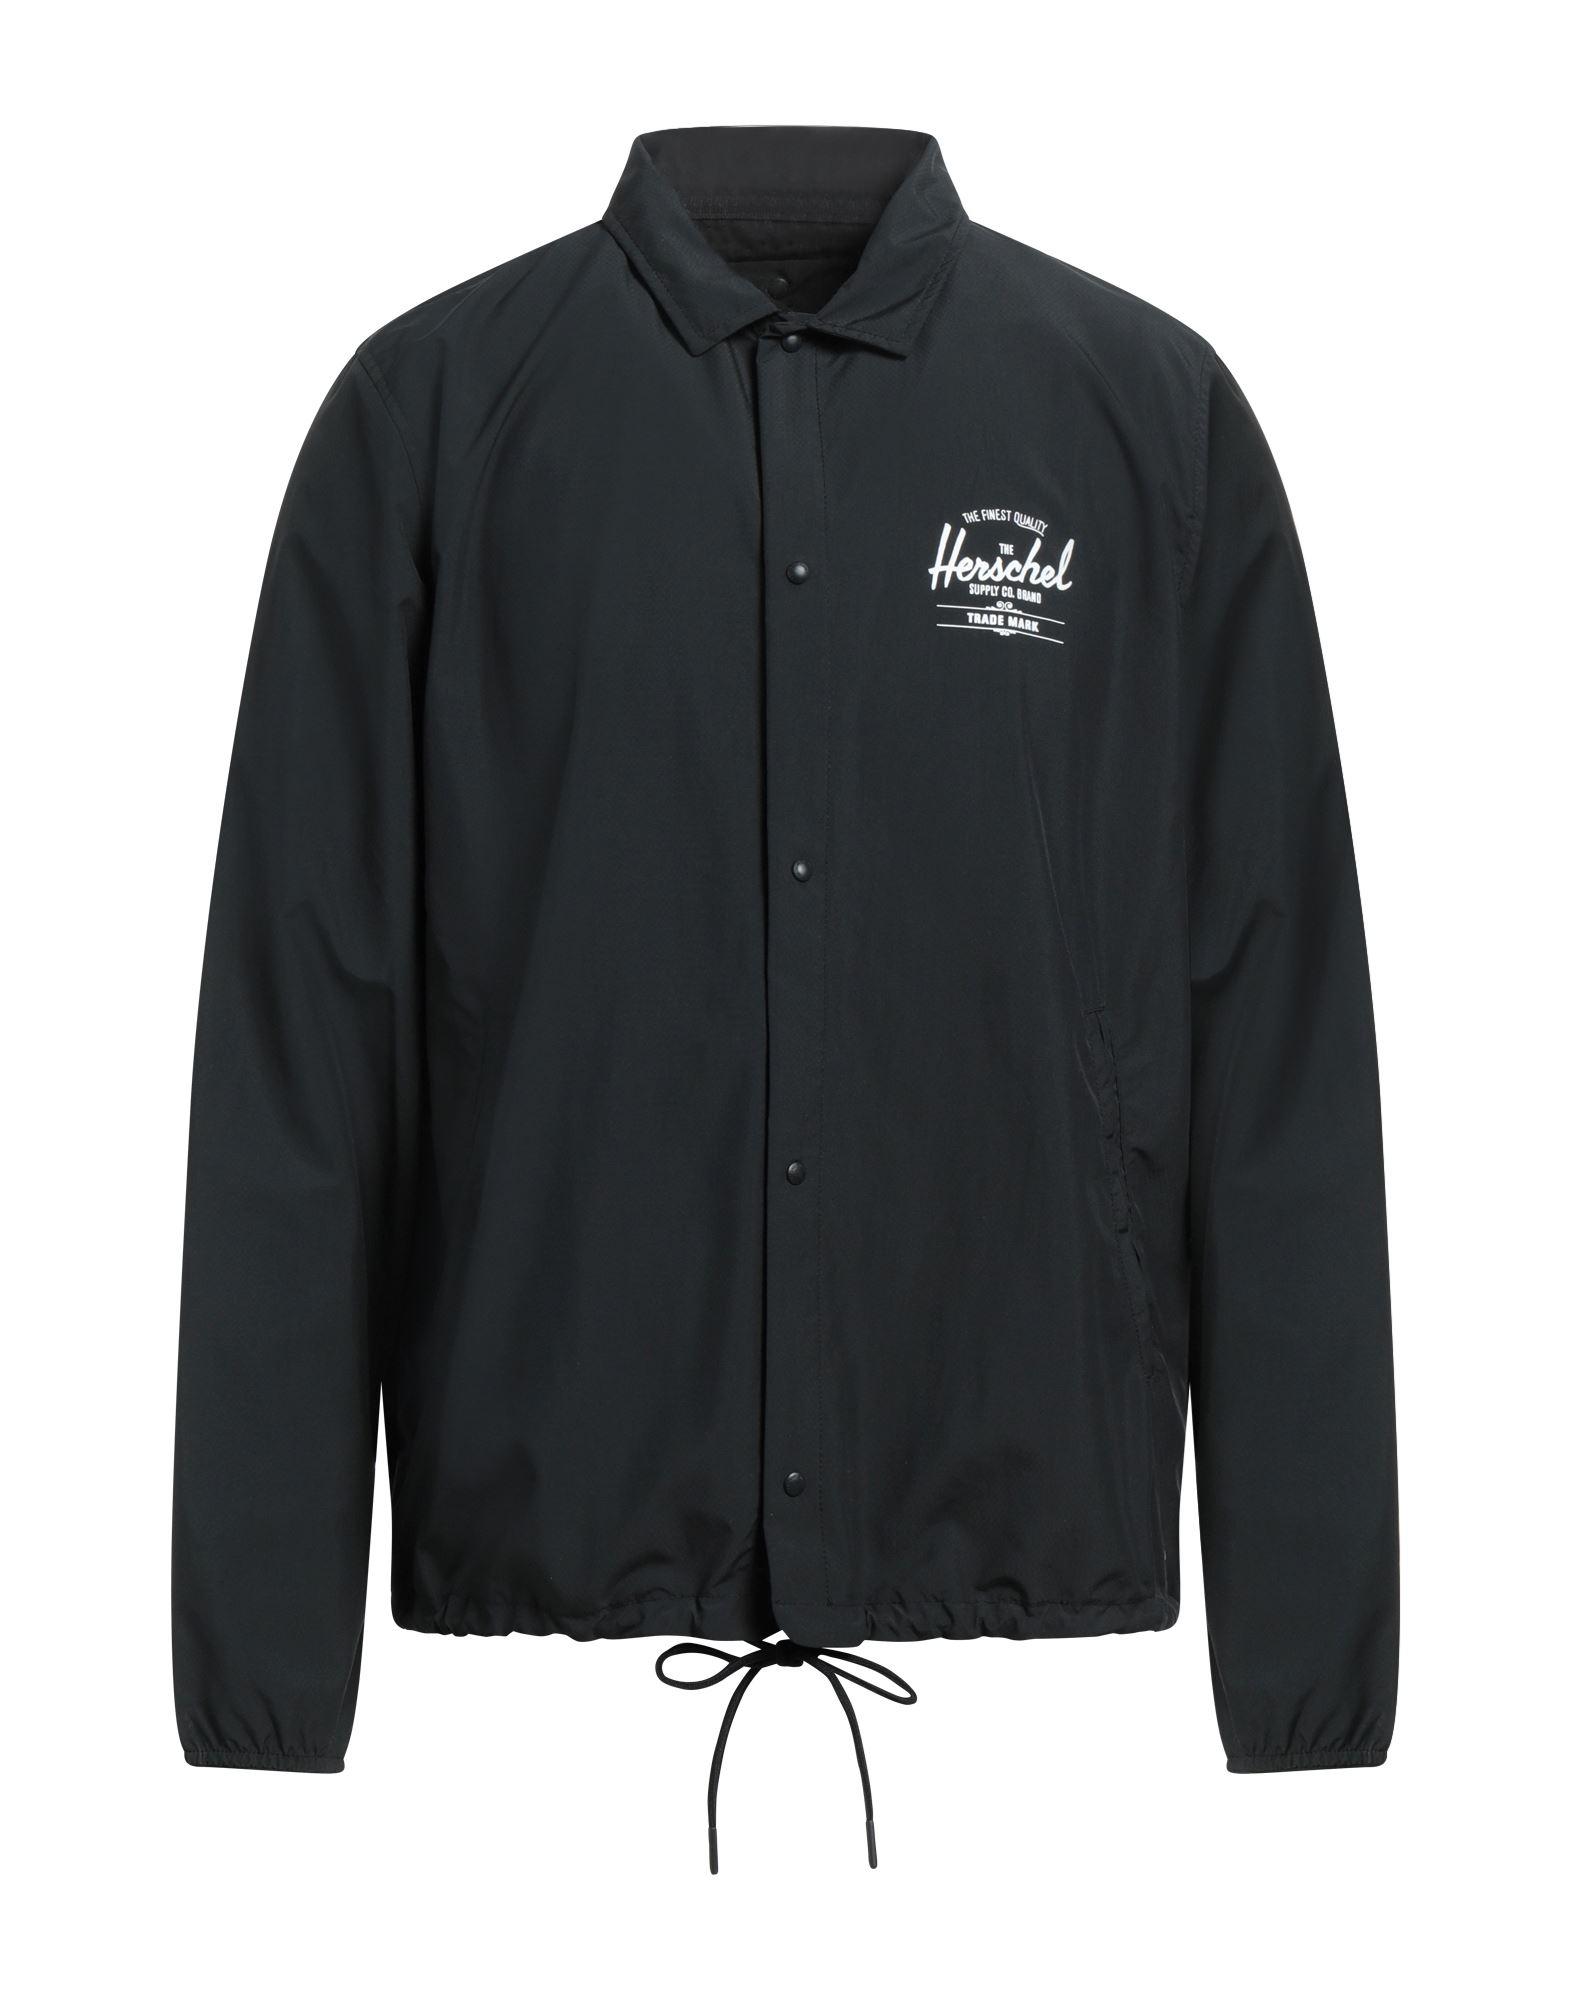 Herschel Supply Co. Jacket in Black for Men | Lyst